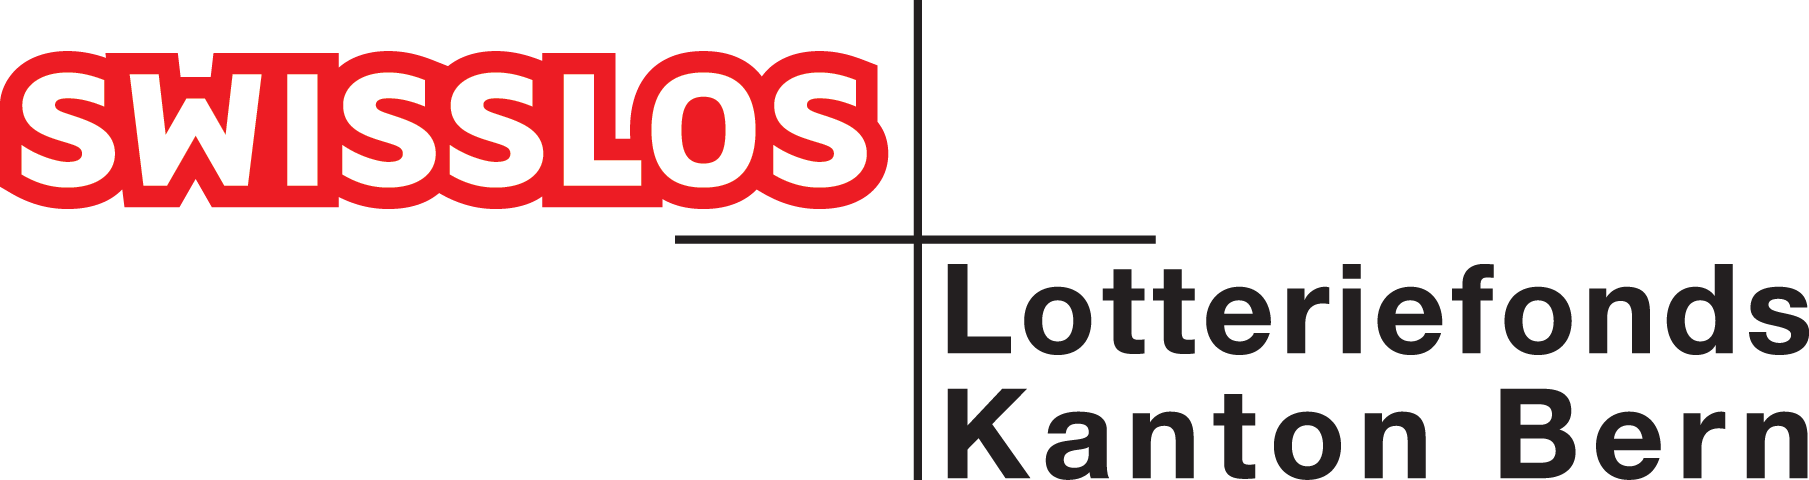 Kanton Bern Lotteriefonds